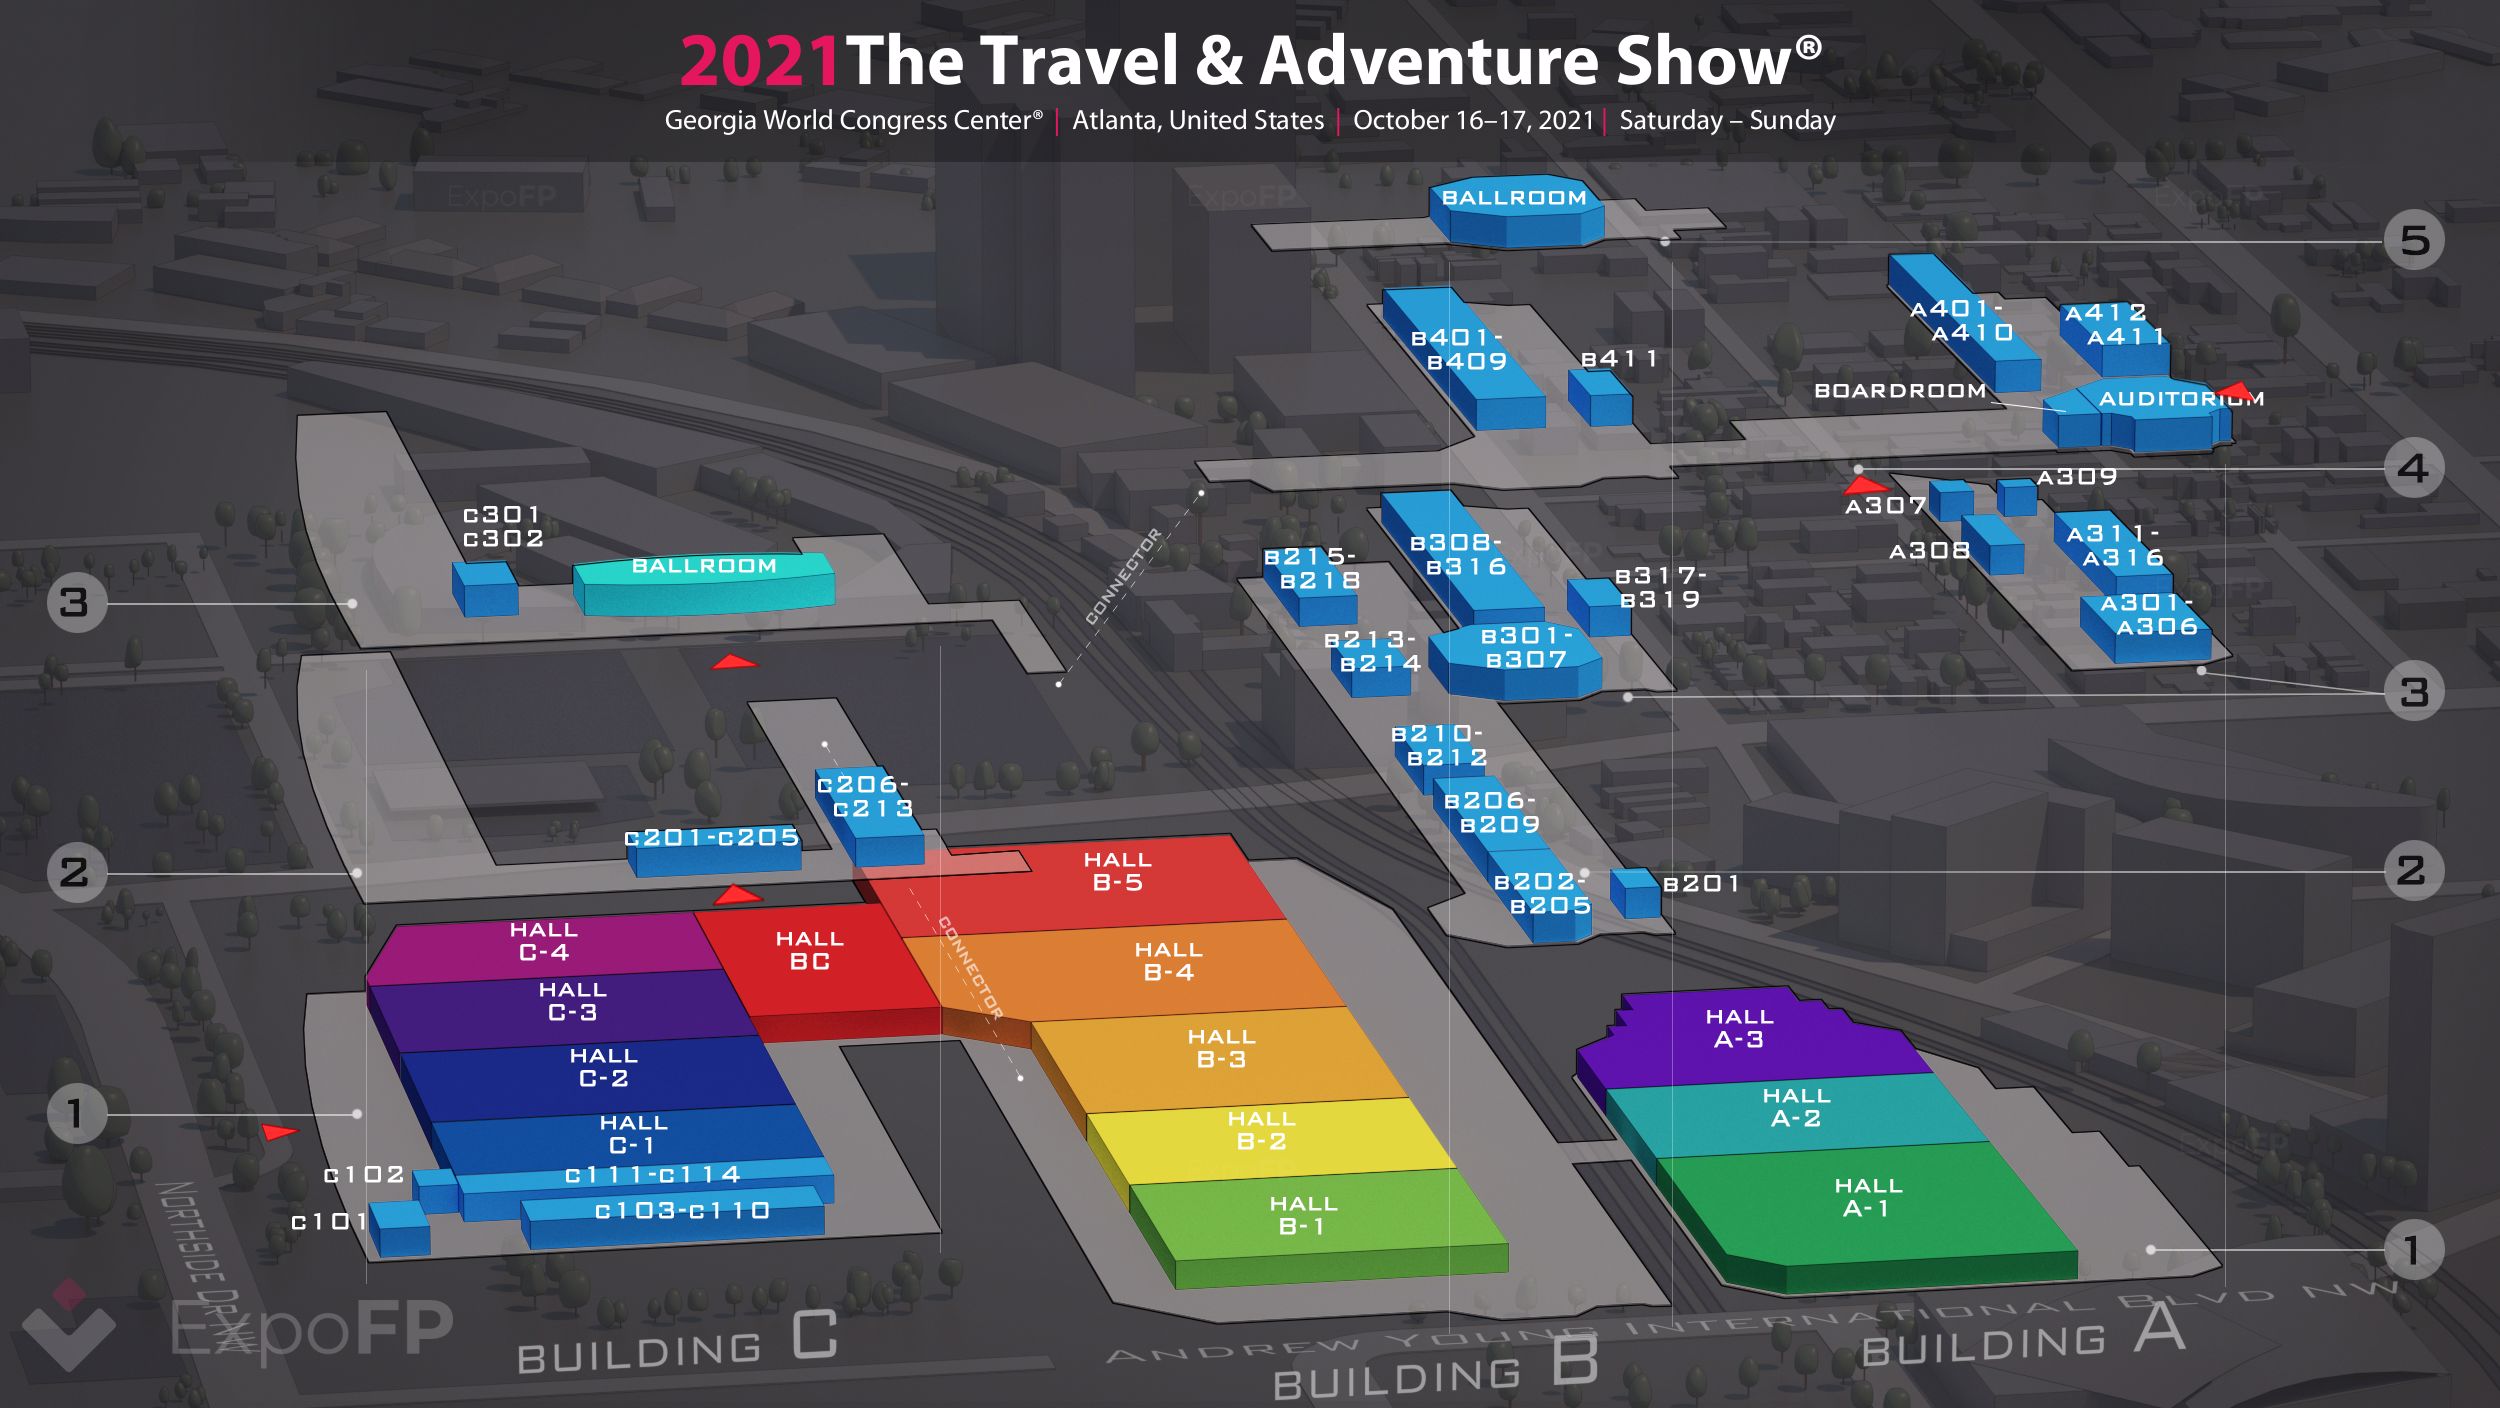 The Travel & Adventure Show 2021 in Georgia World Congress Center